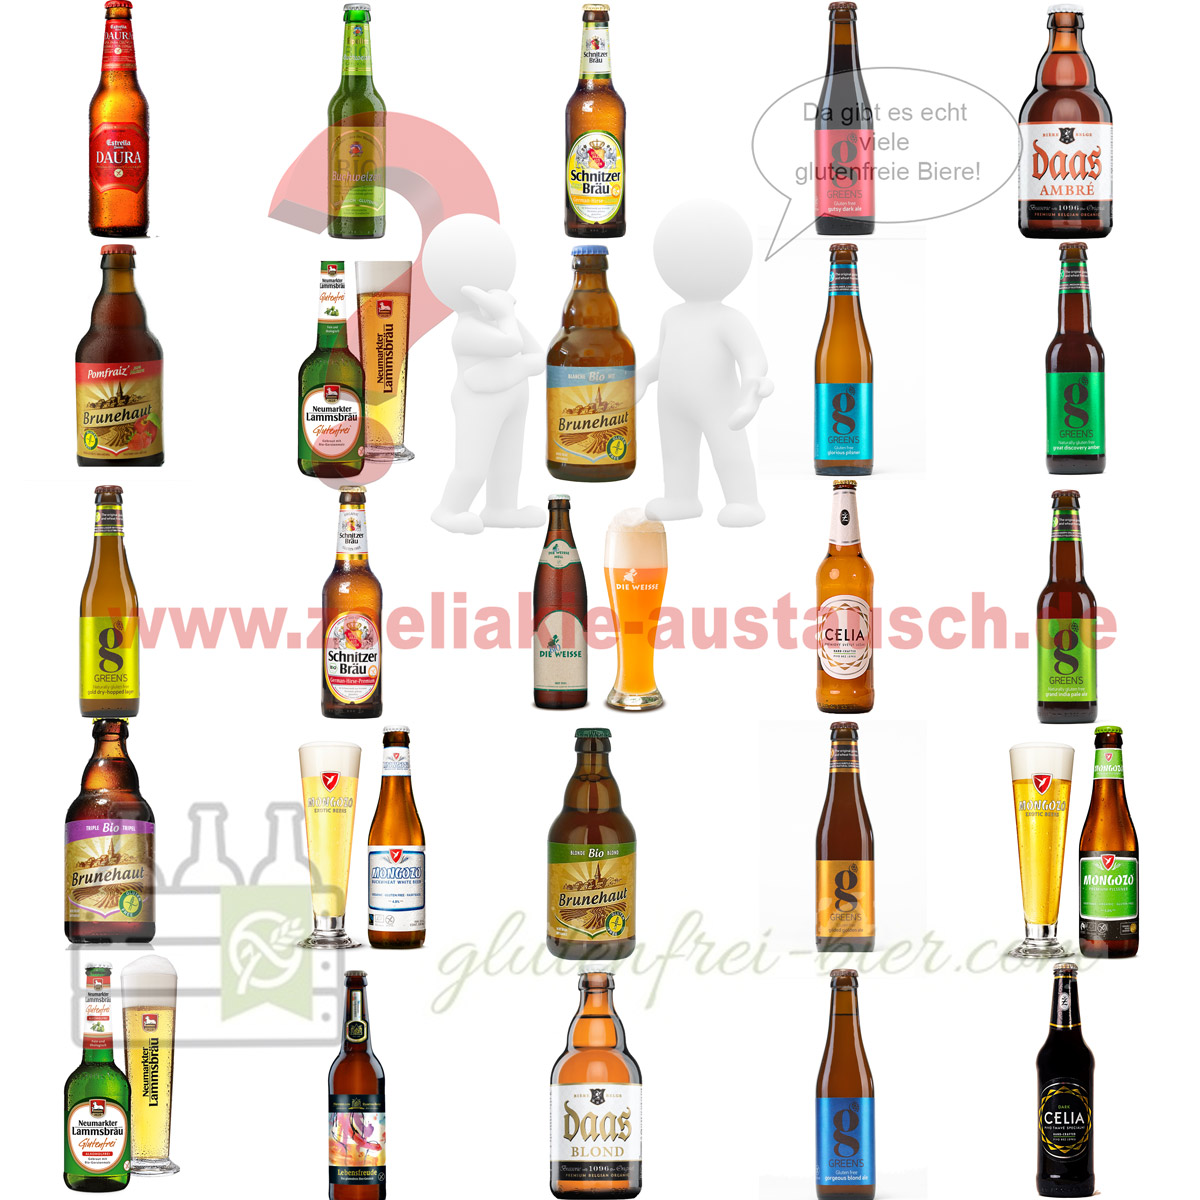 Biere-Auswahl-Matrix